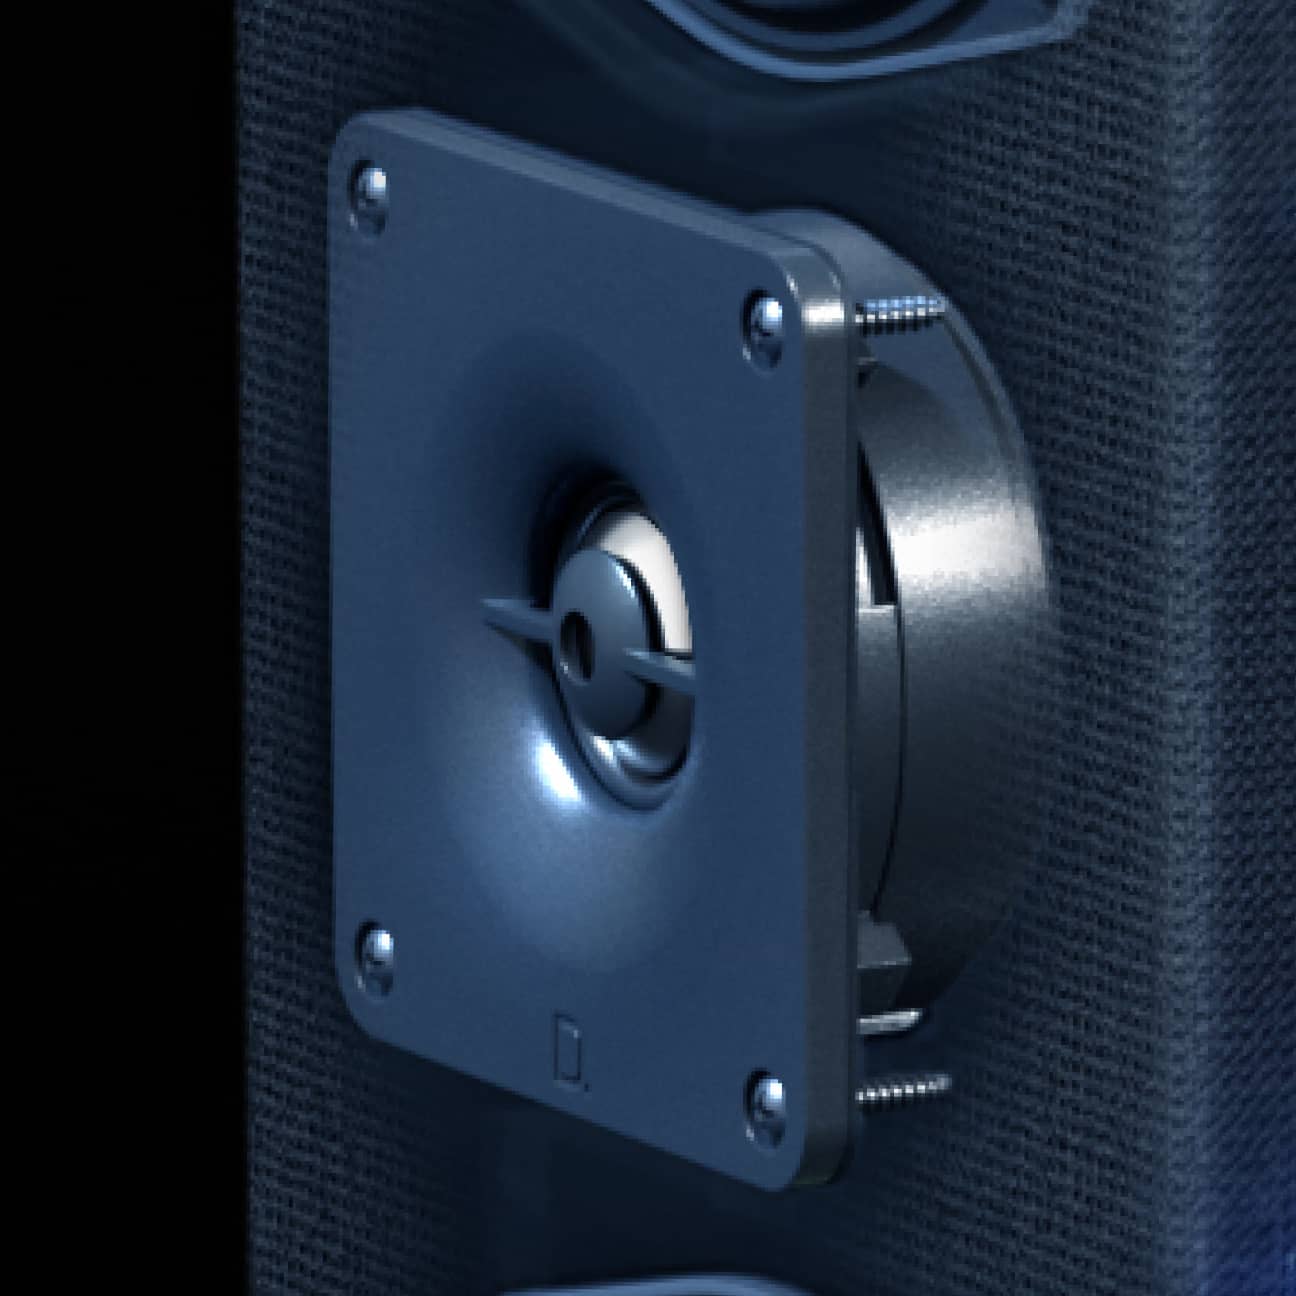 dBtechnologies MINIBOX-L80D 2-Way Active Speaker